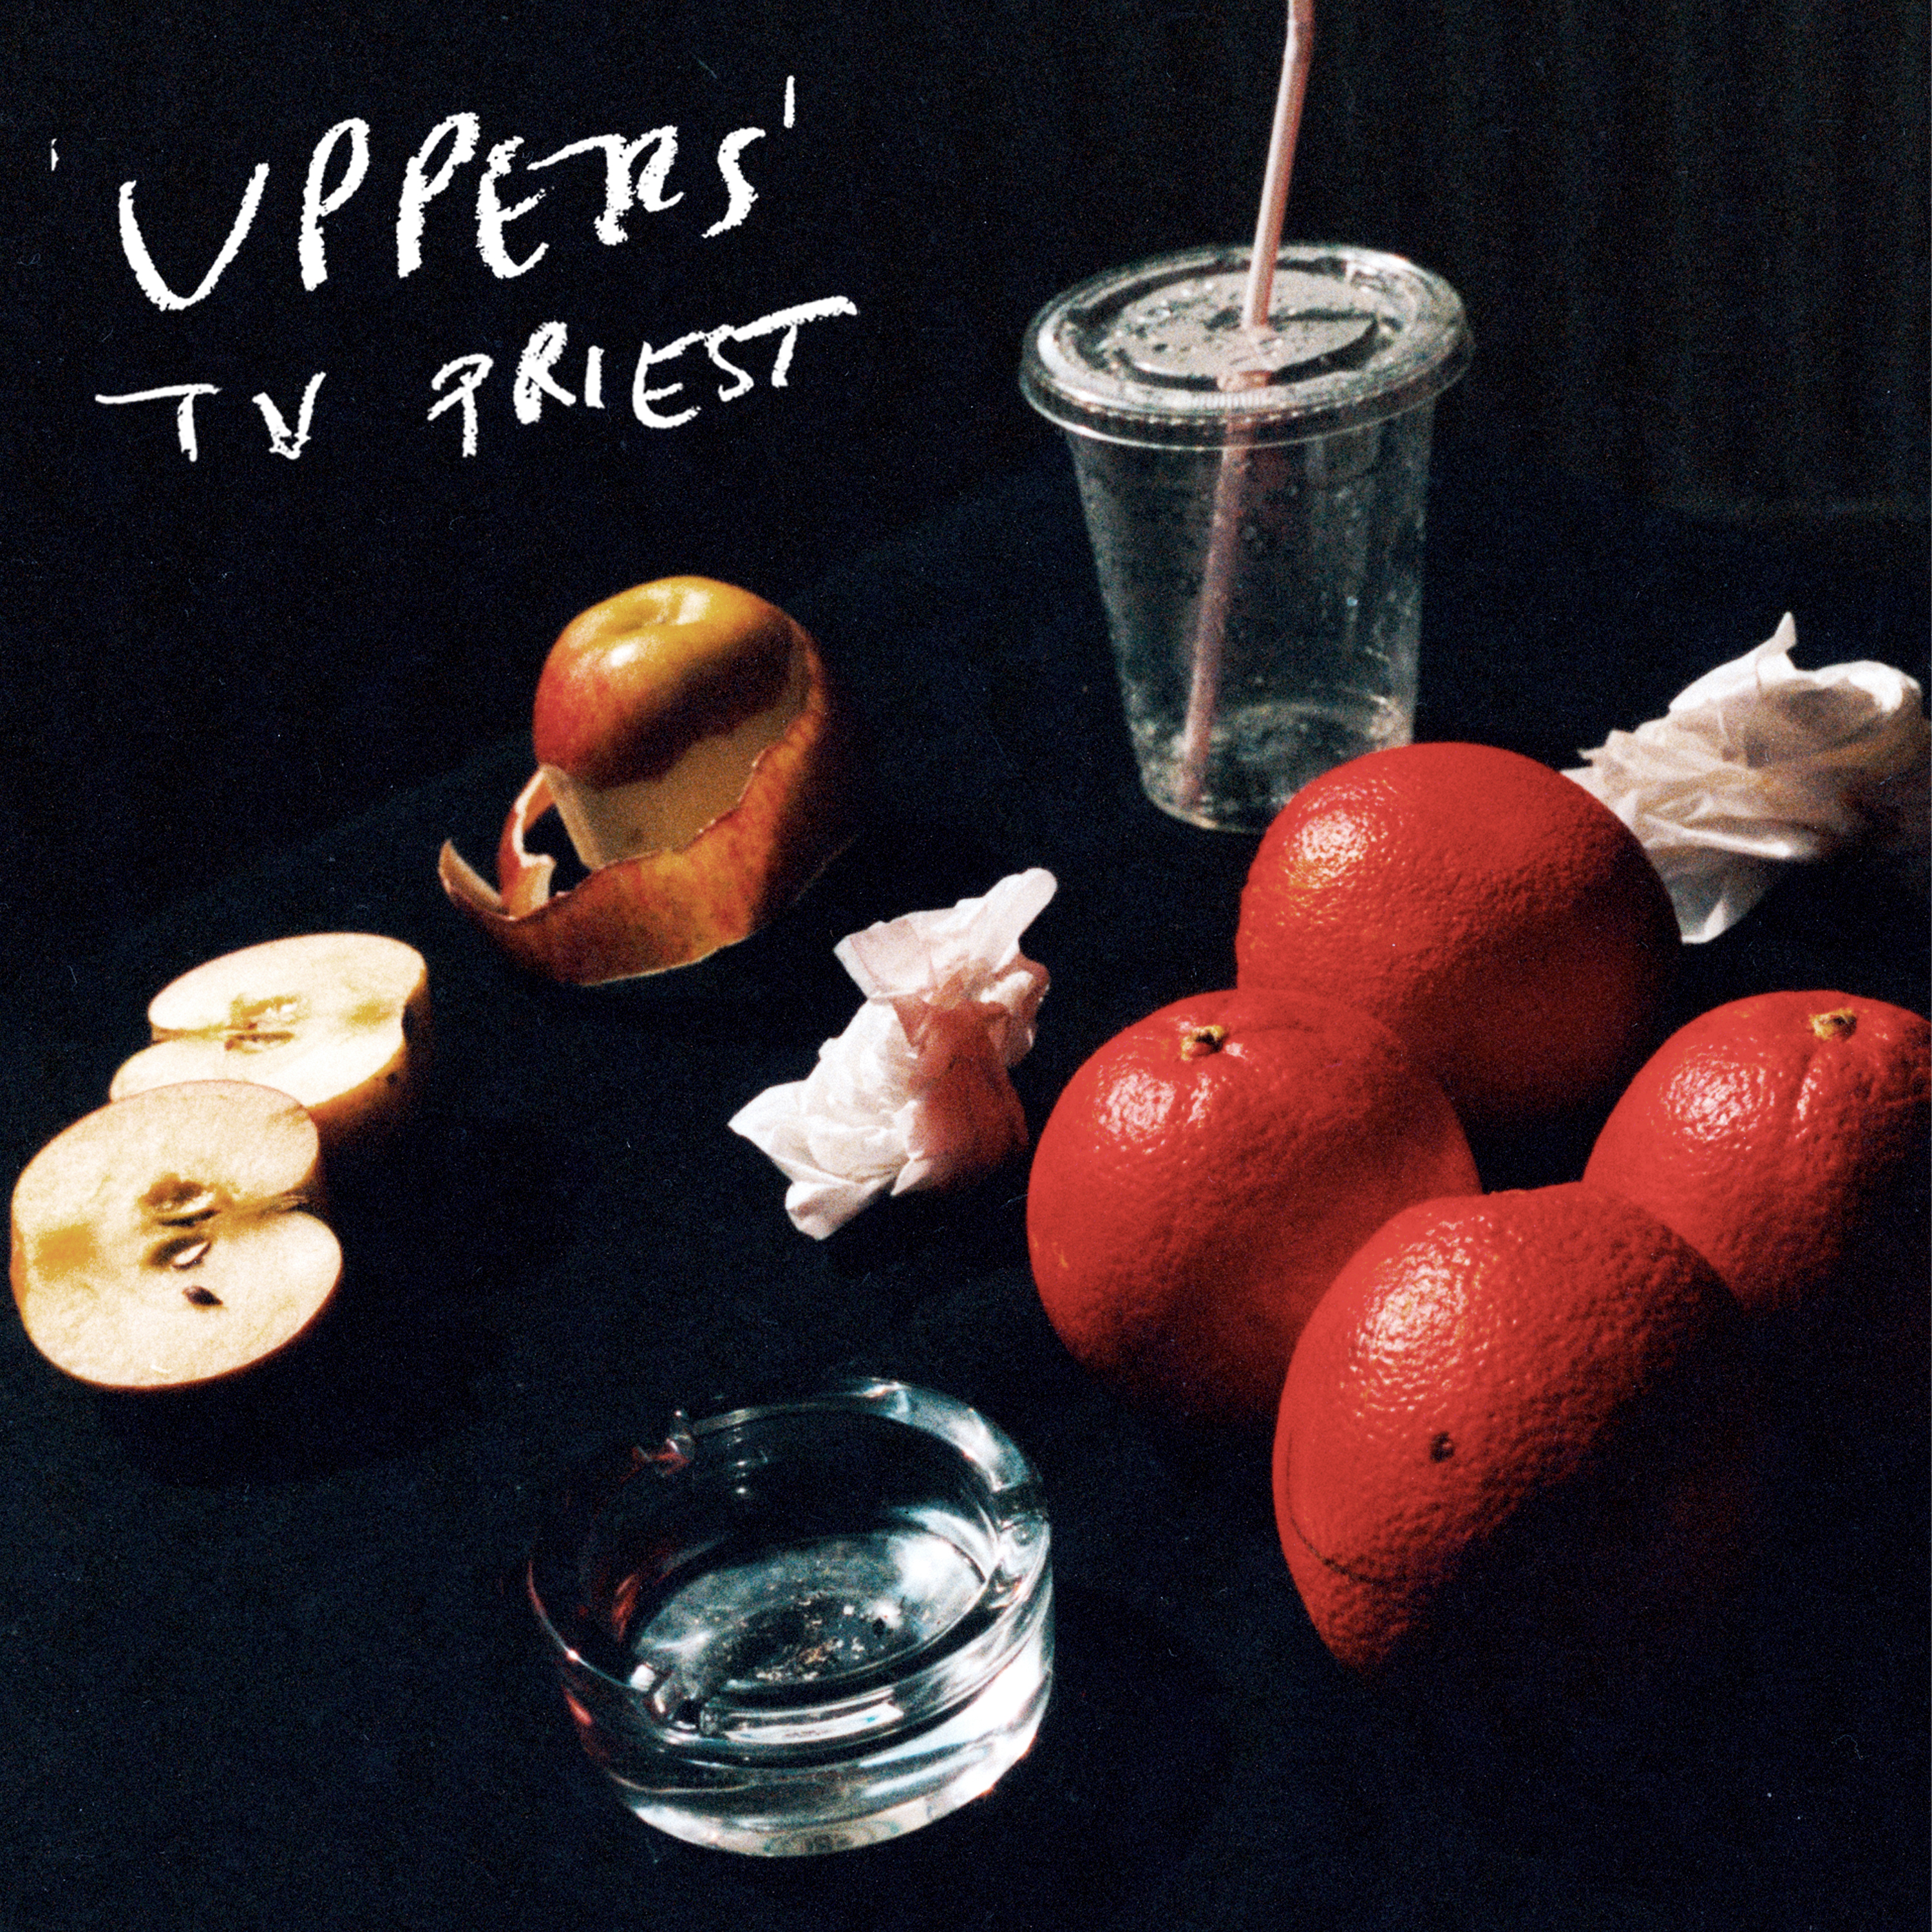 TV Priest - Uppers - CD